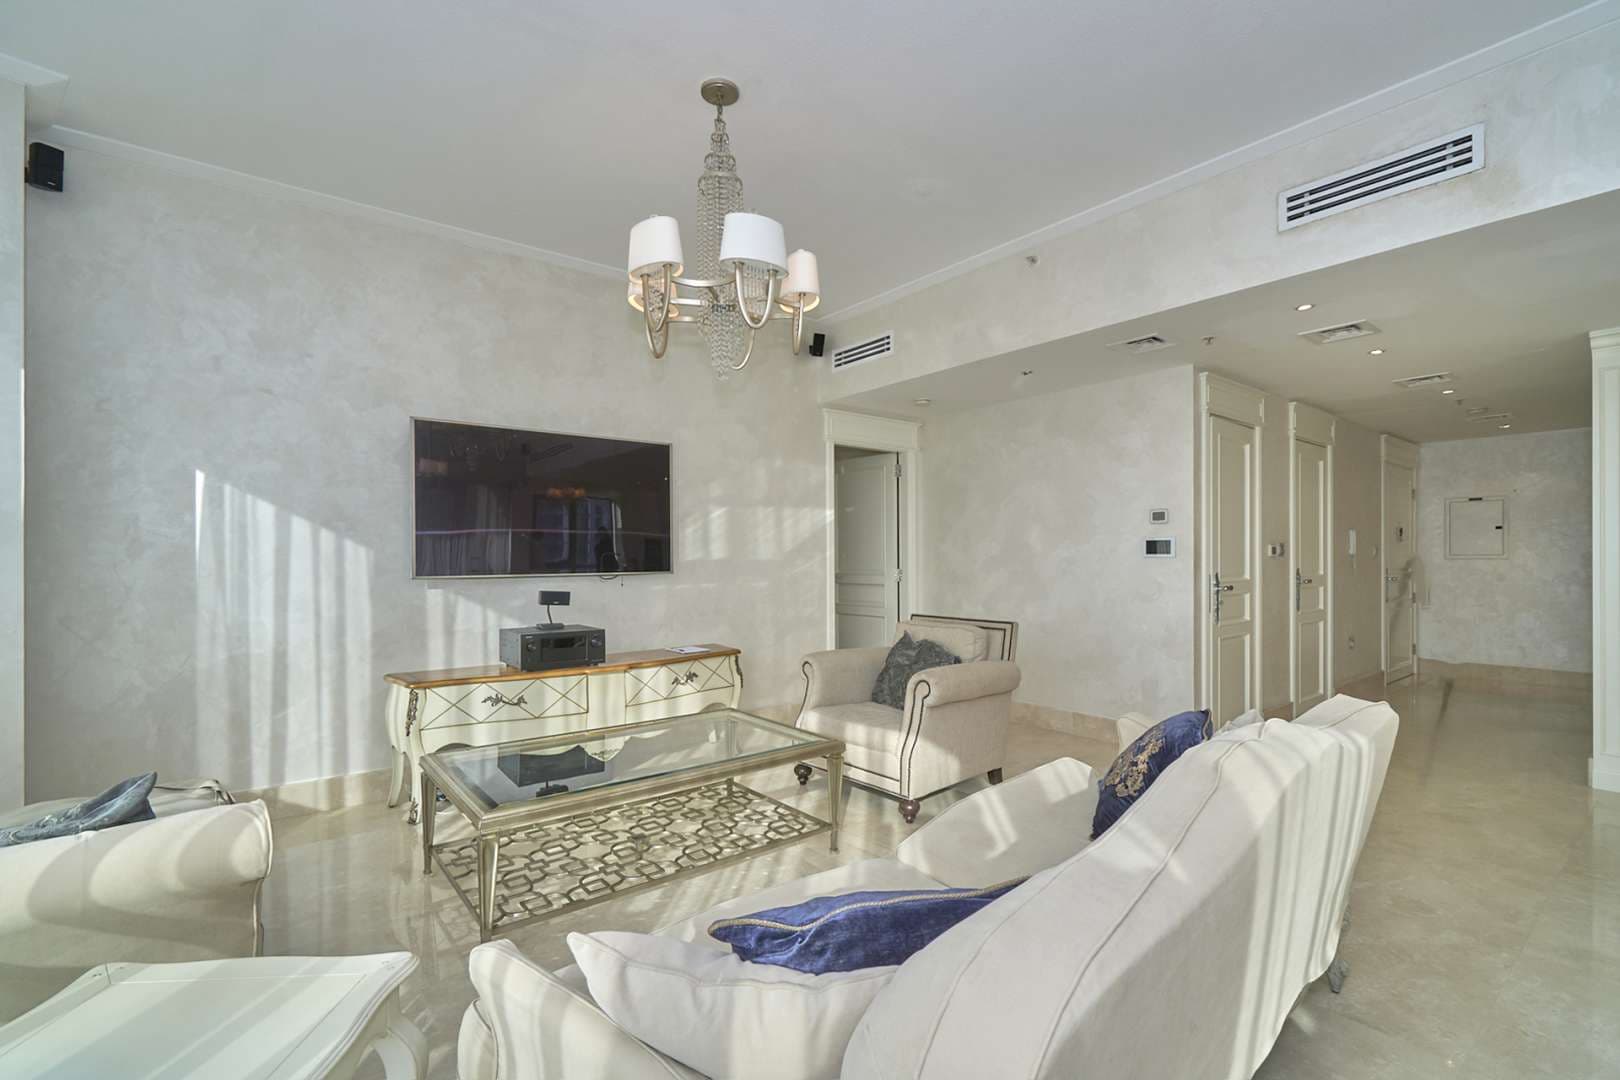 2 Bedroom Apartment For Rent South Ridge Lp08449 9bce1c8099c6100.jpg